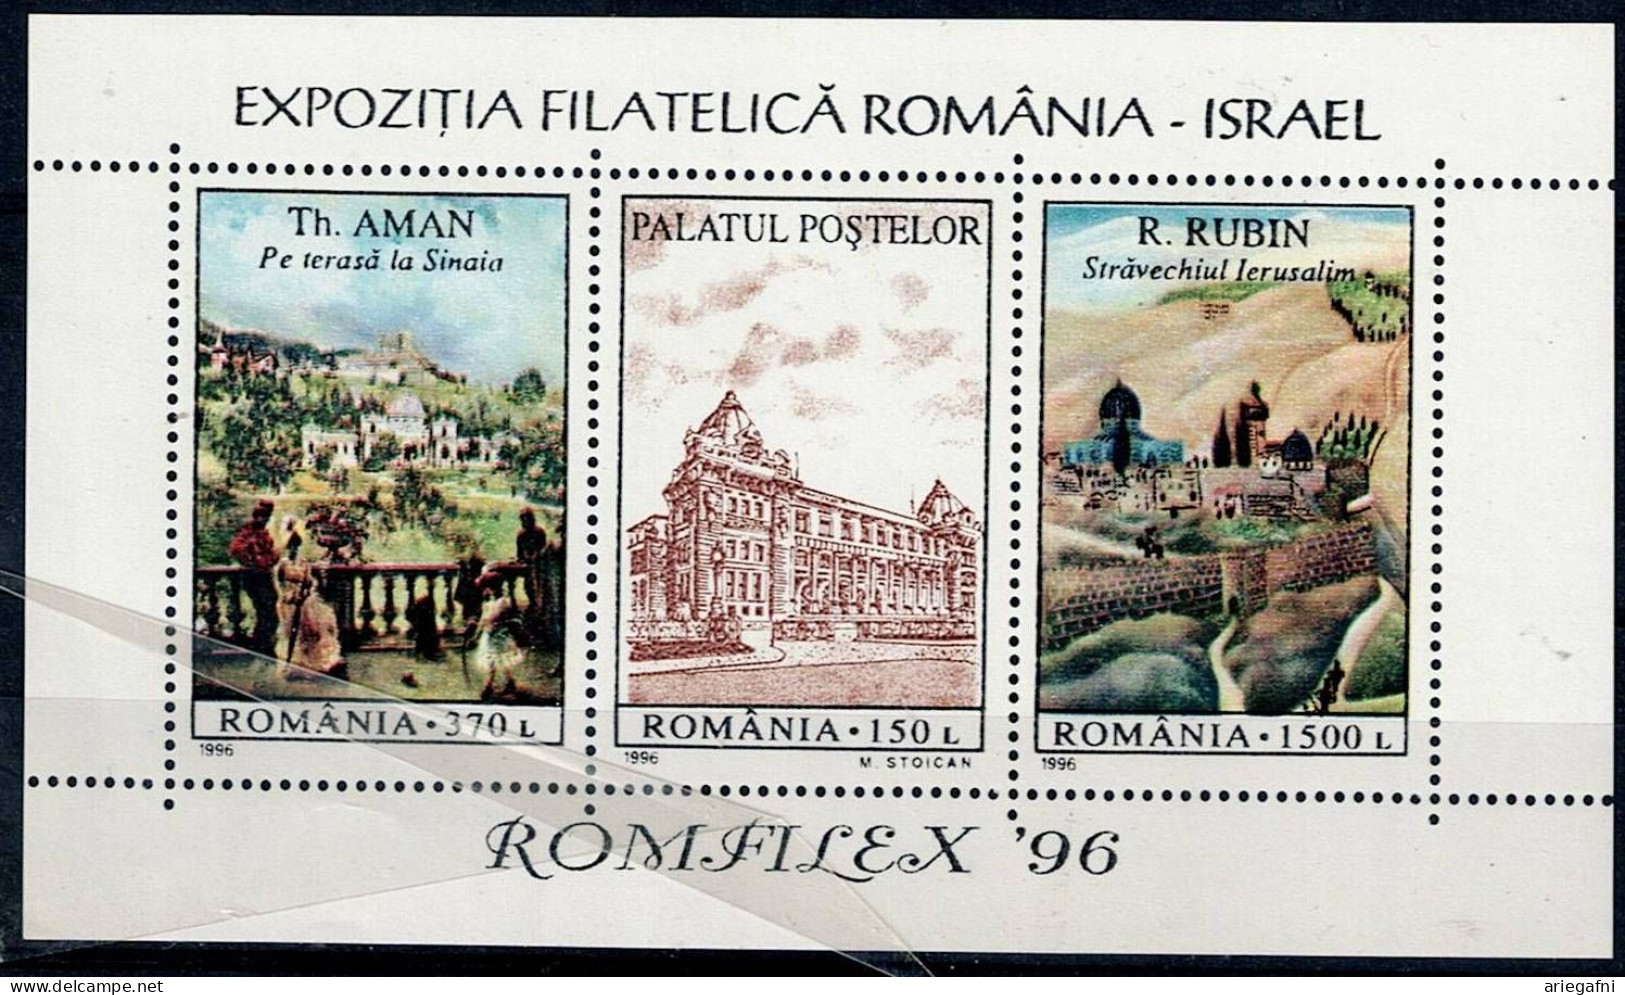 ROMANIA 1996 ROMANIAN-ISRAELI STAMP EXHIBITION PAINTING MI No BLOCK 298 MNH VF!! - Blocks & Kleinbögen